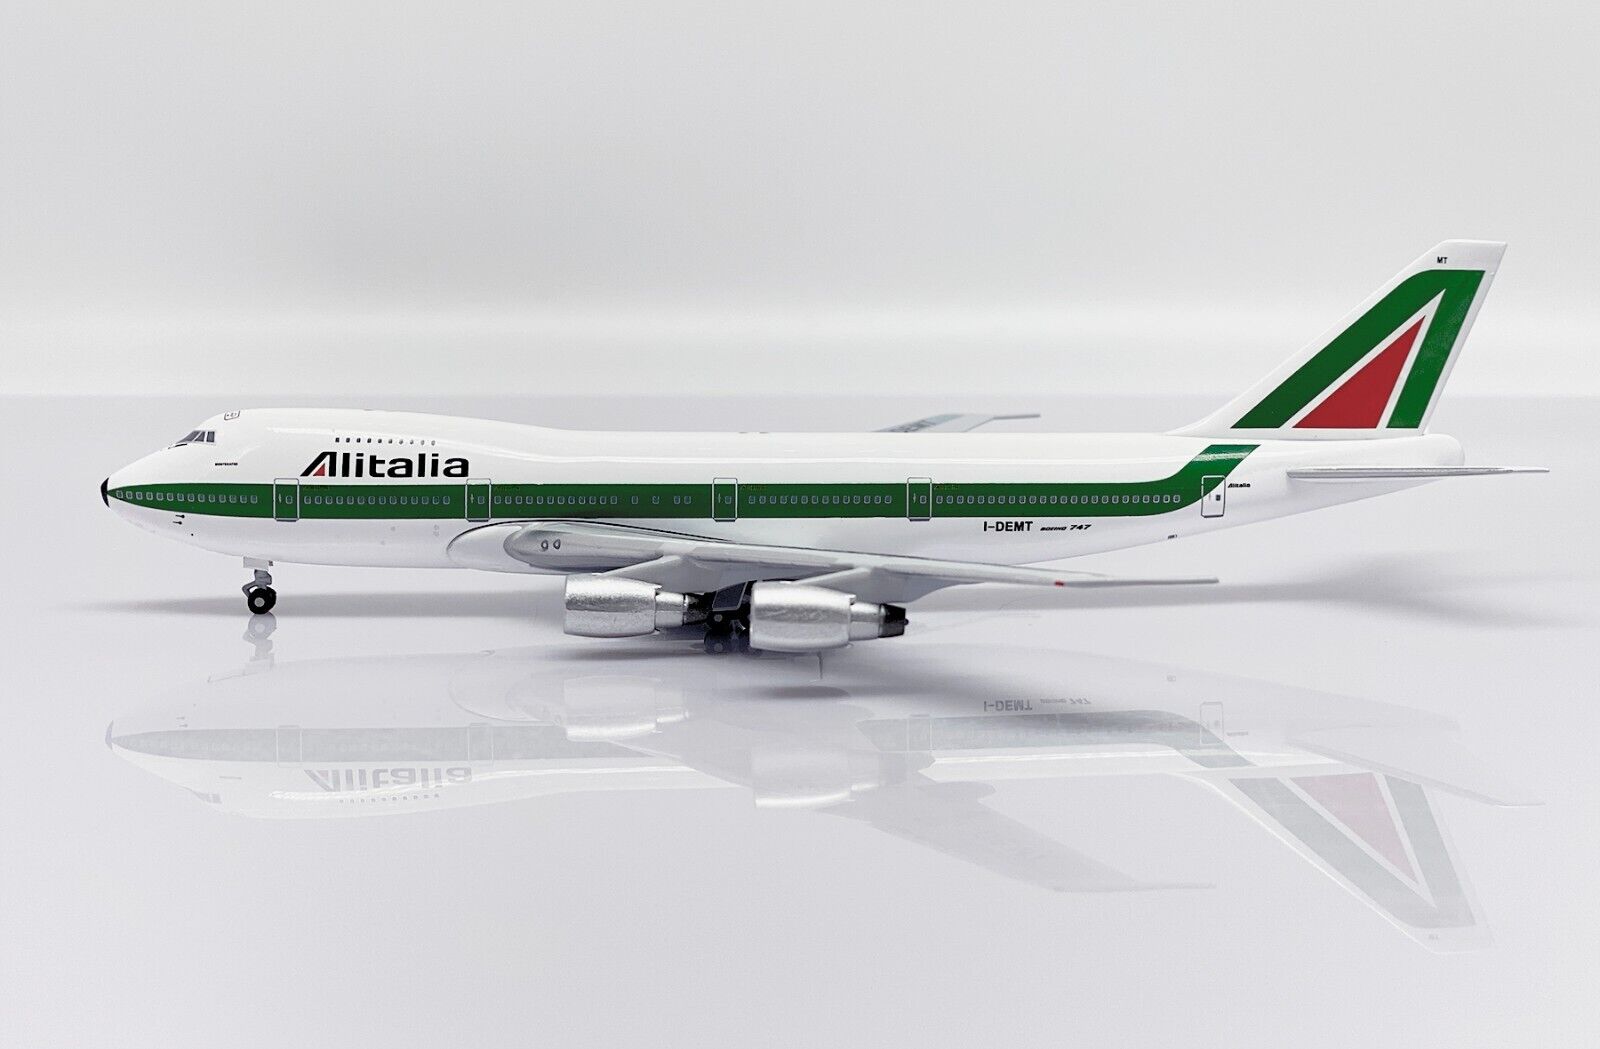 Alitalia B747-200B(M) Reg: I-DEMT Scale 1:400 Aeroclassics Diecast FYRS74703 (E)